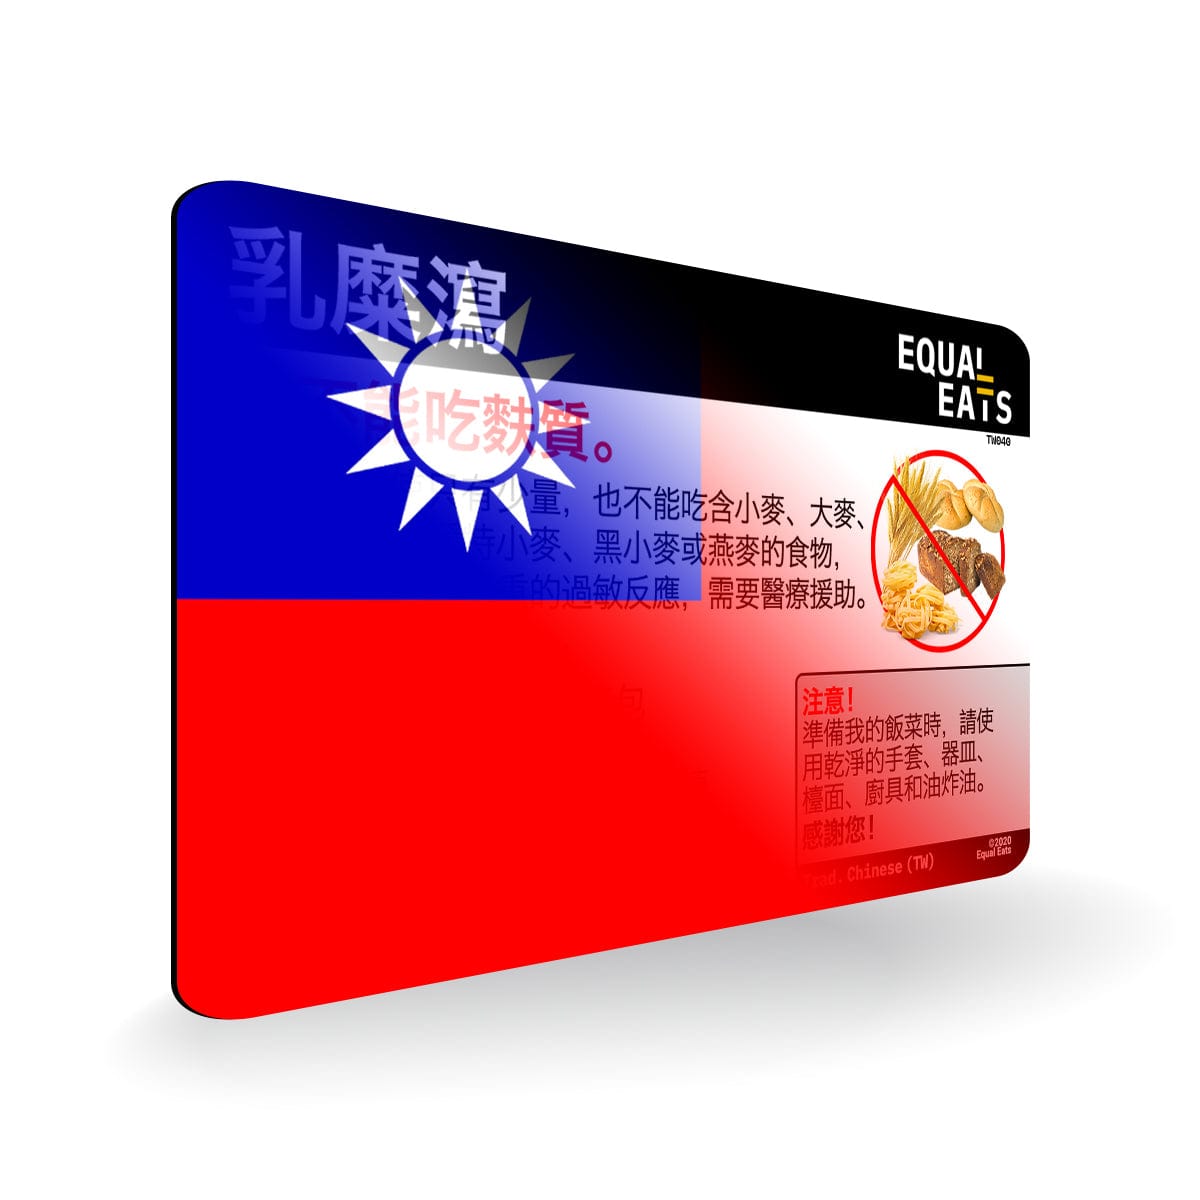 Traditional Chinese Celiac Disease Card - Gluten Free Travel in Taiwan